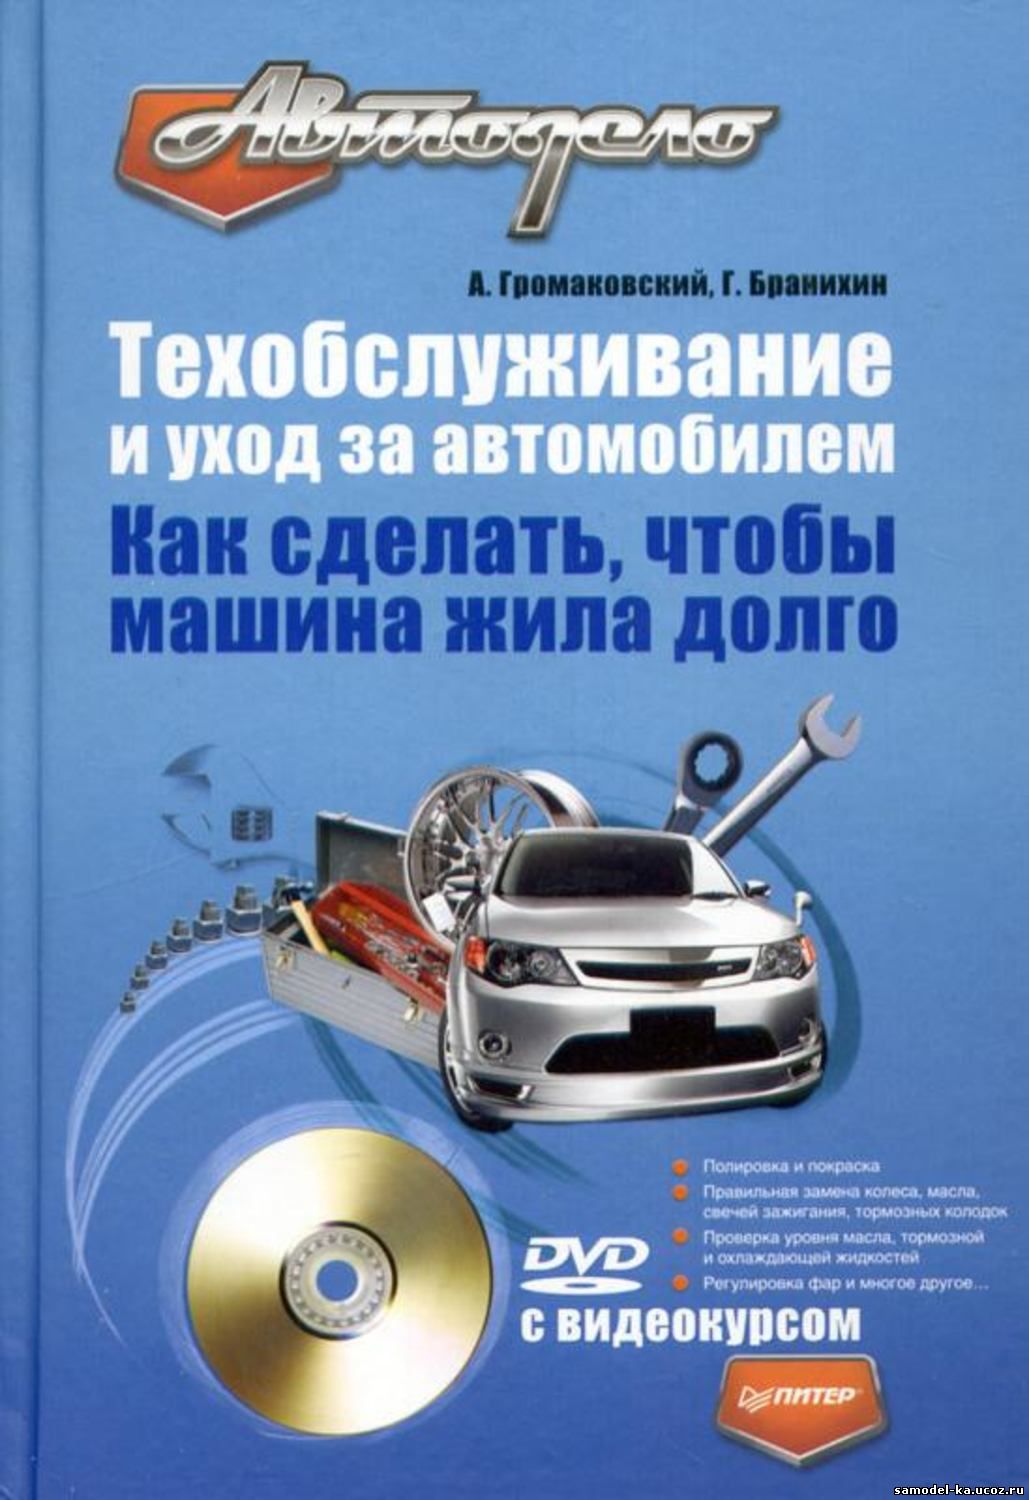 Техобслуживание и уход за автомобилем (2009) А. Громаковский